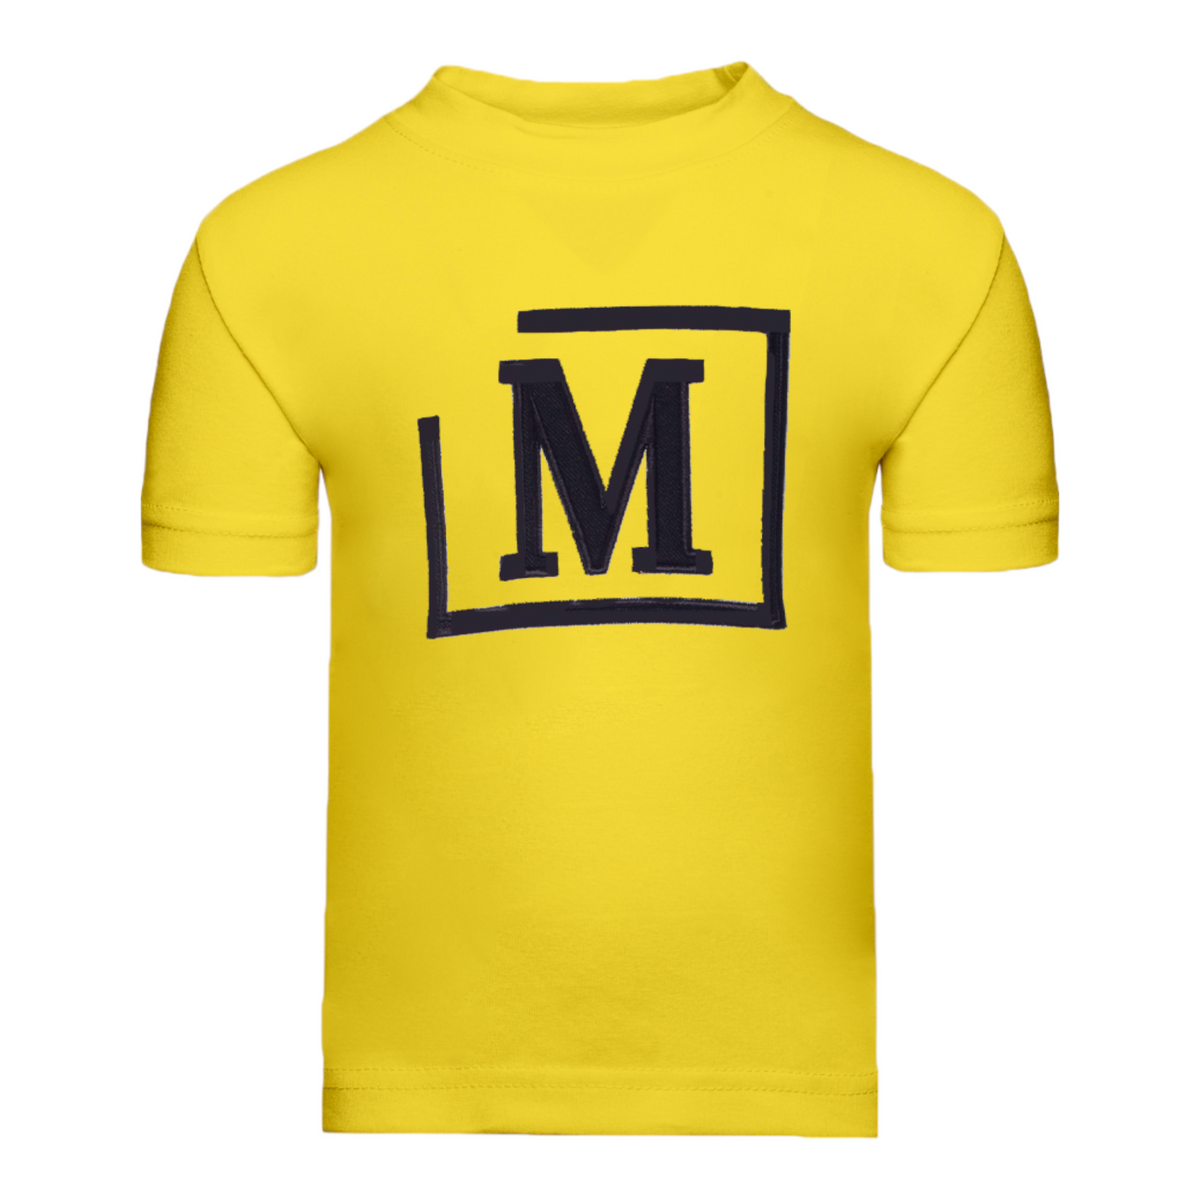 MDB Brand Kid's Classic M Embroidered Logo Tee - Warm Color